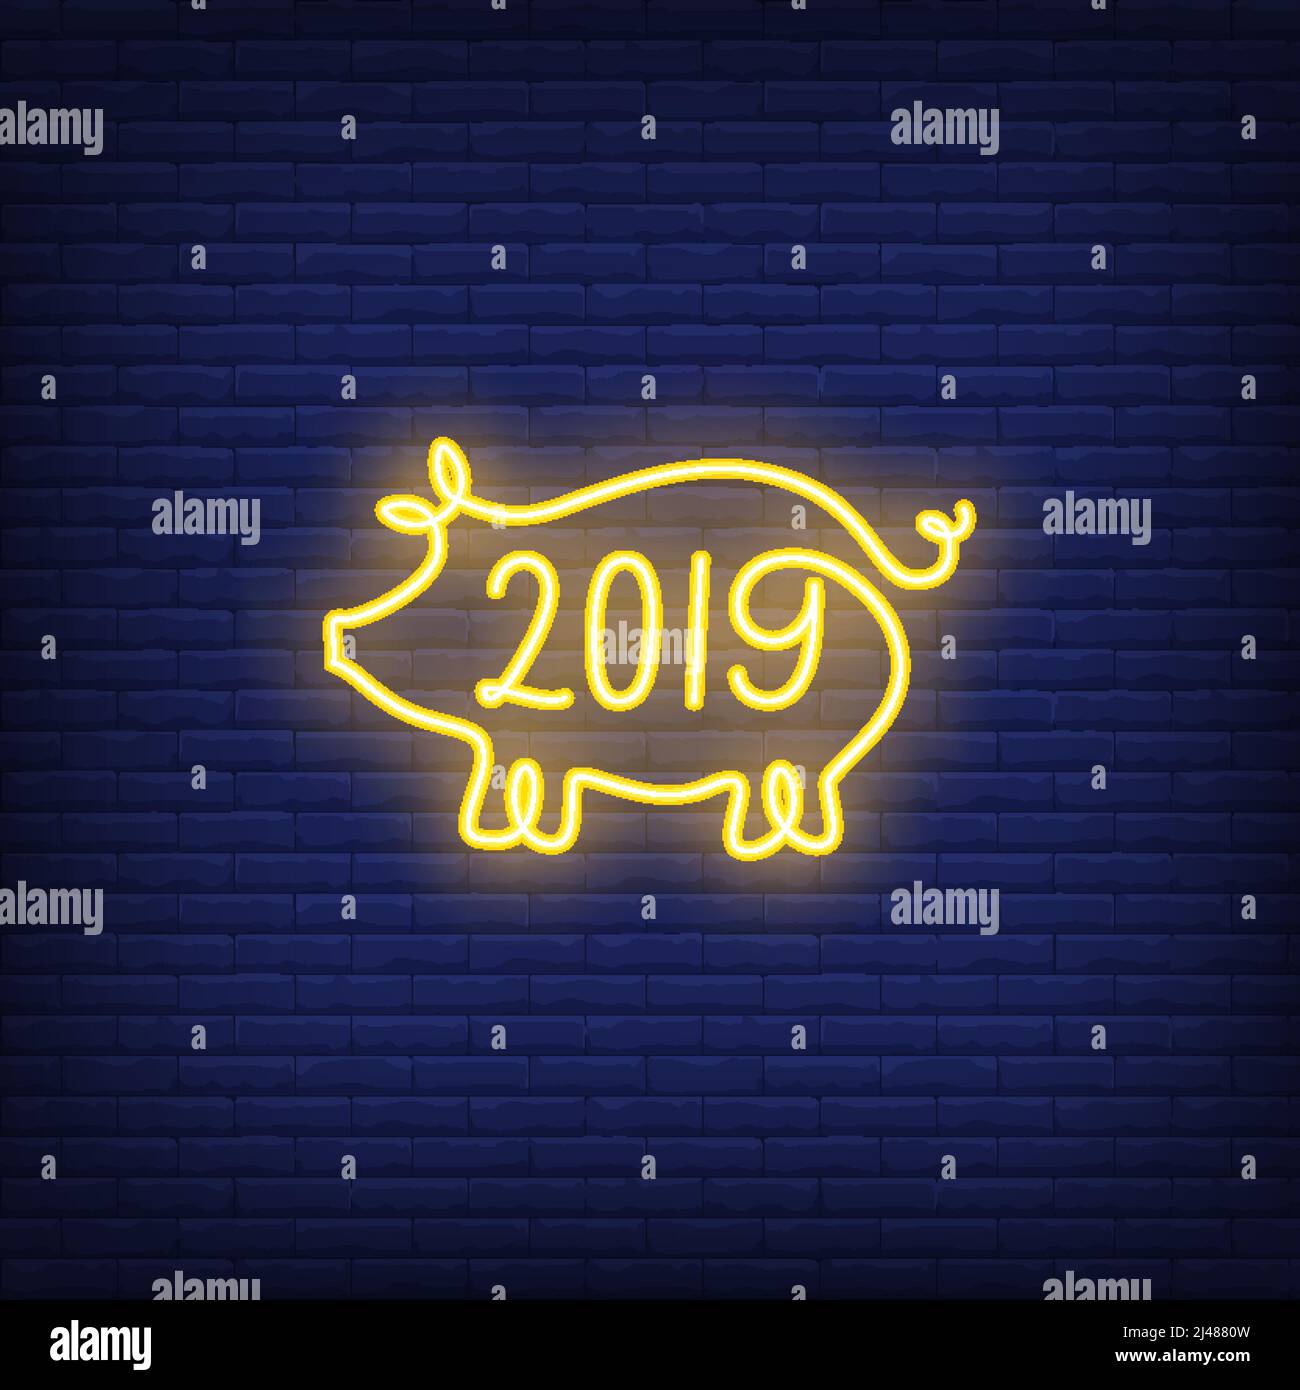 Twenty nineteen neon sign with yellow pig shape. Night bright advertisement. Vector illustration for new year, festive design, restaurant menu Stock Vector